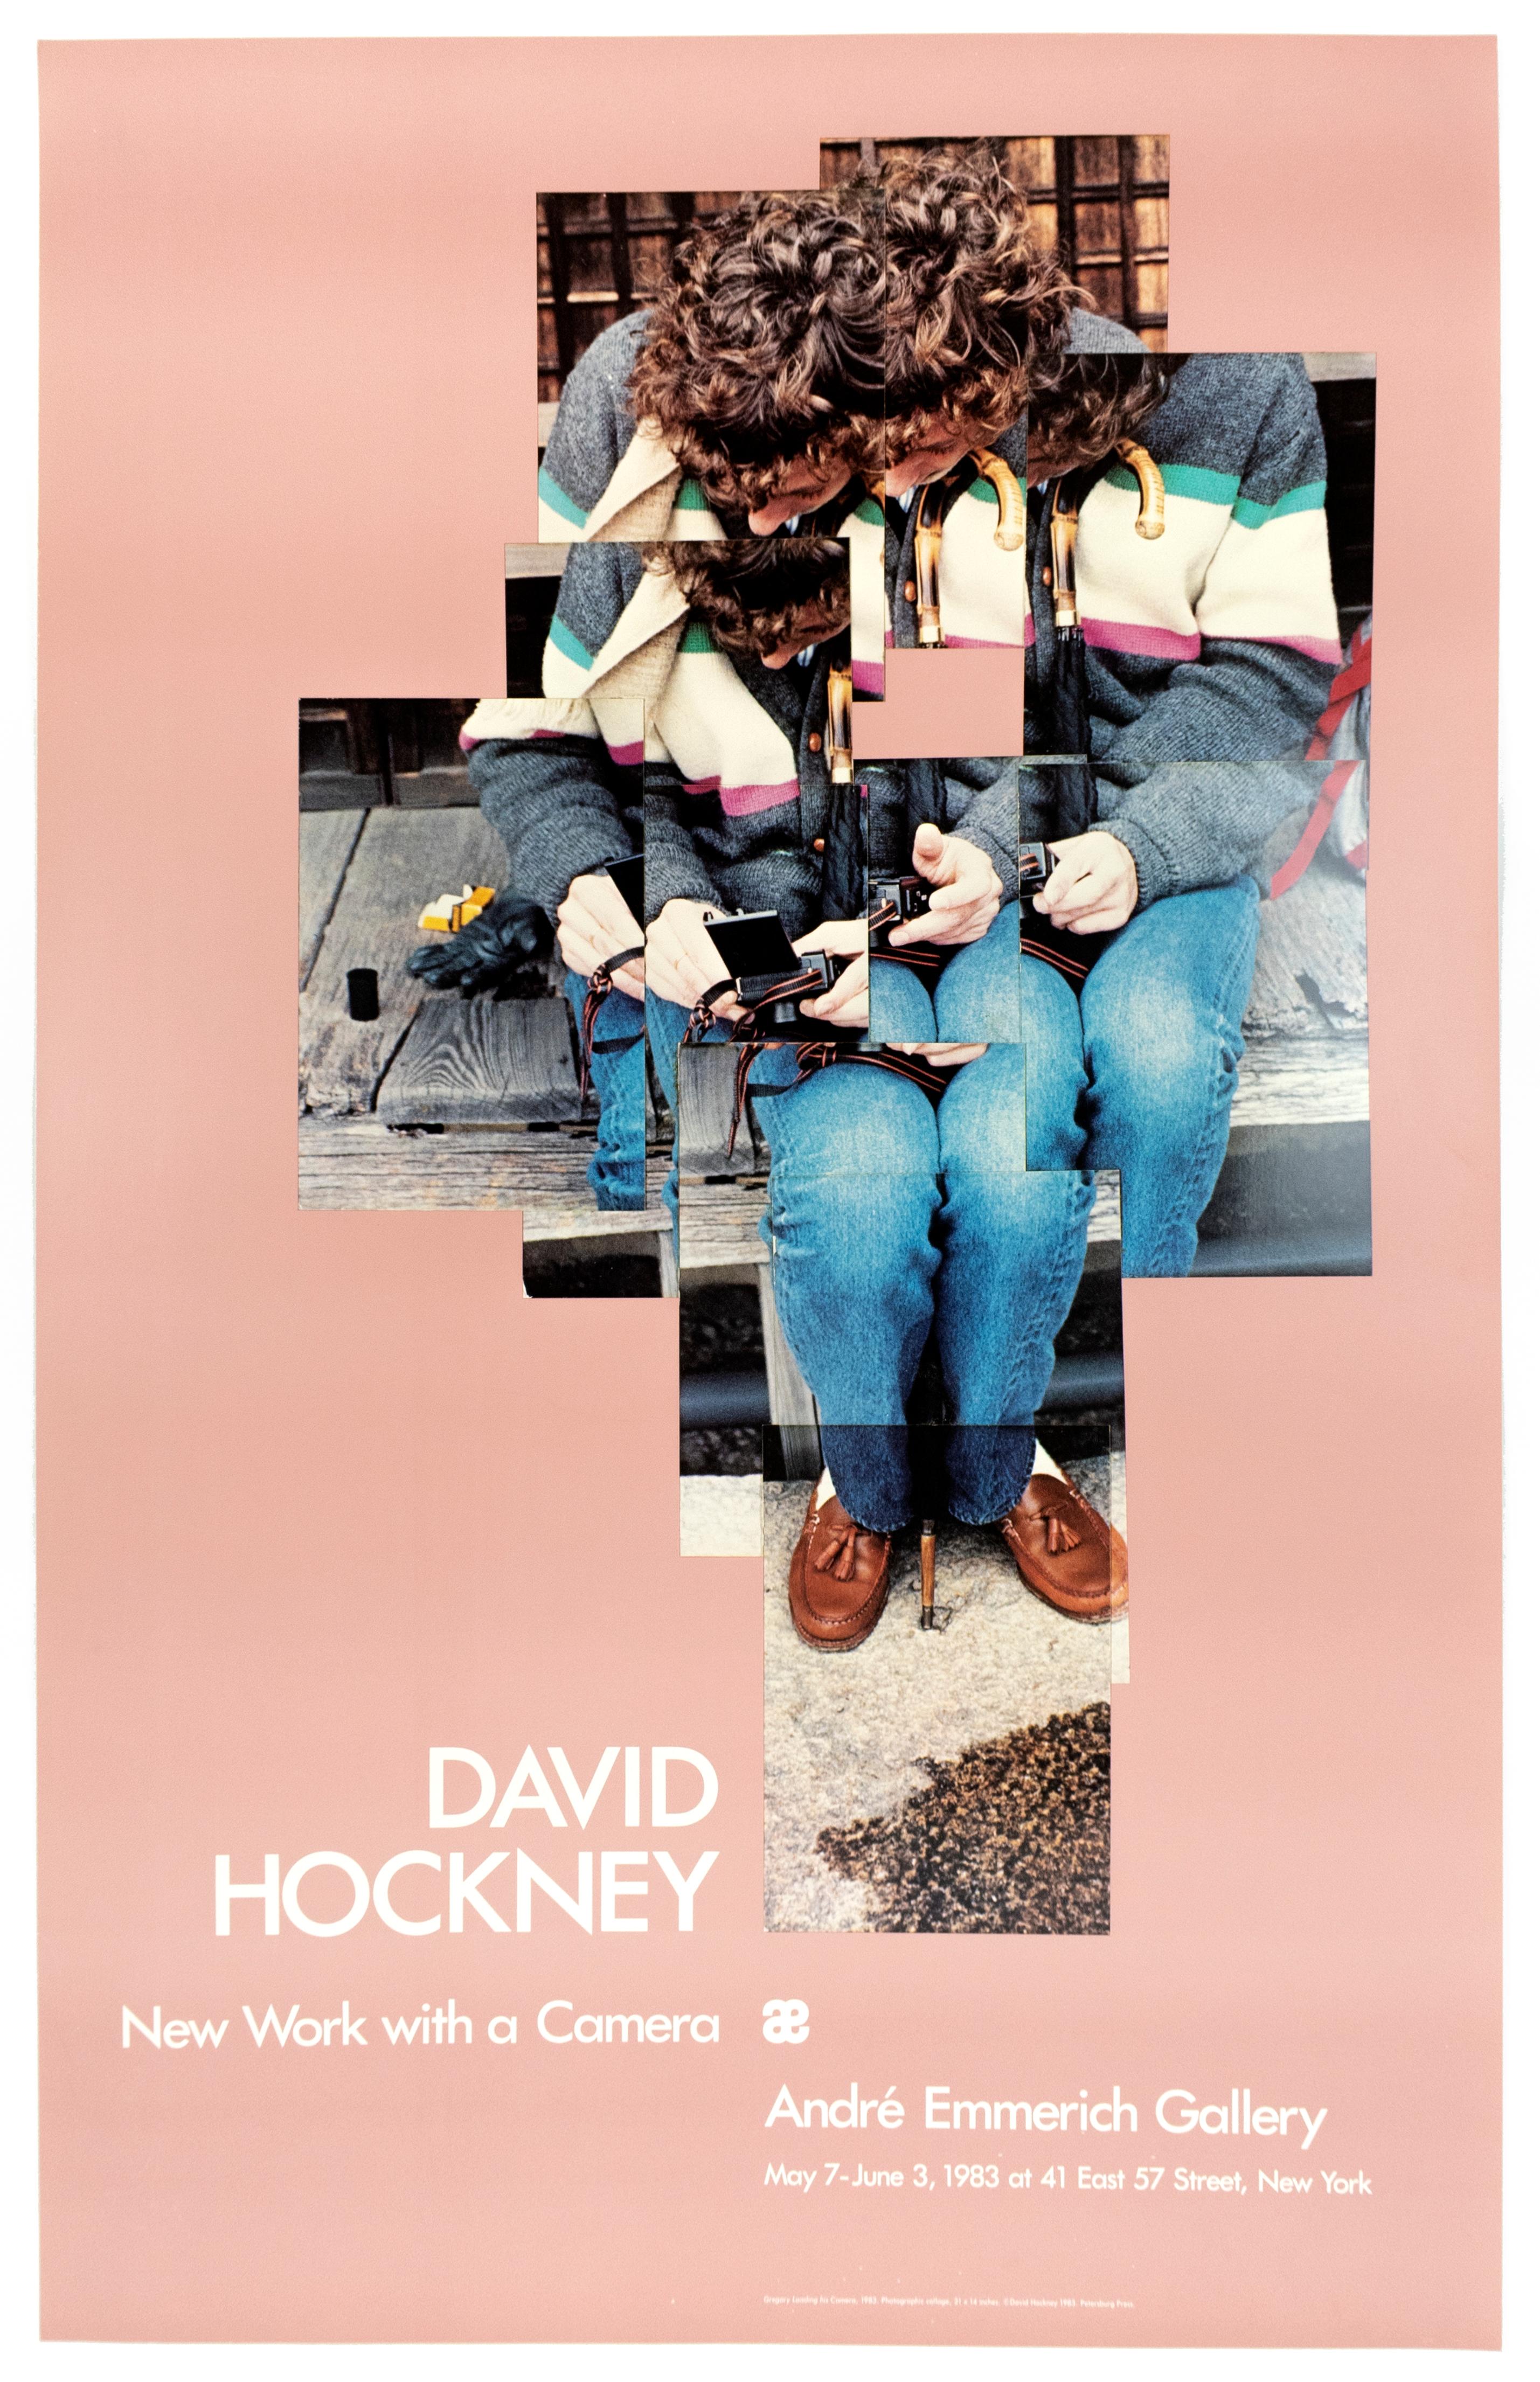 (after) David Hockney Portrait Print - Exhibition Poster Gregory Loading His Camera 1983 in vintage millennial pink